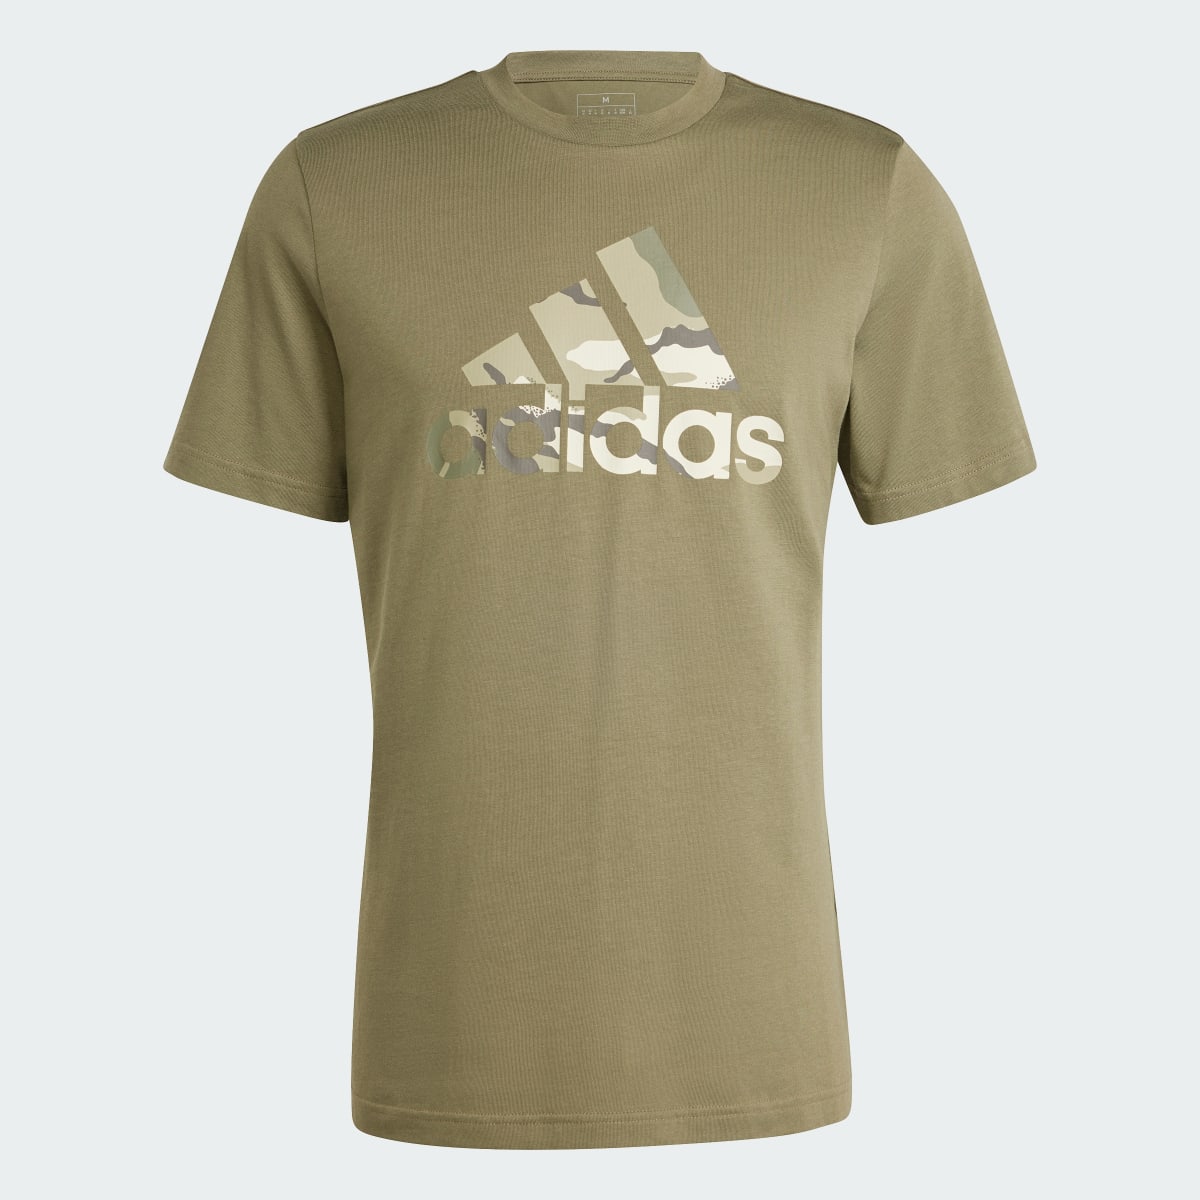 Adidas Camo Badge of Sport Graphic T-Shirt. 5